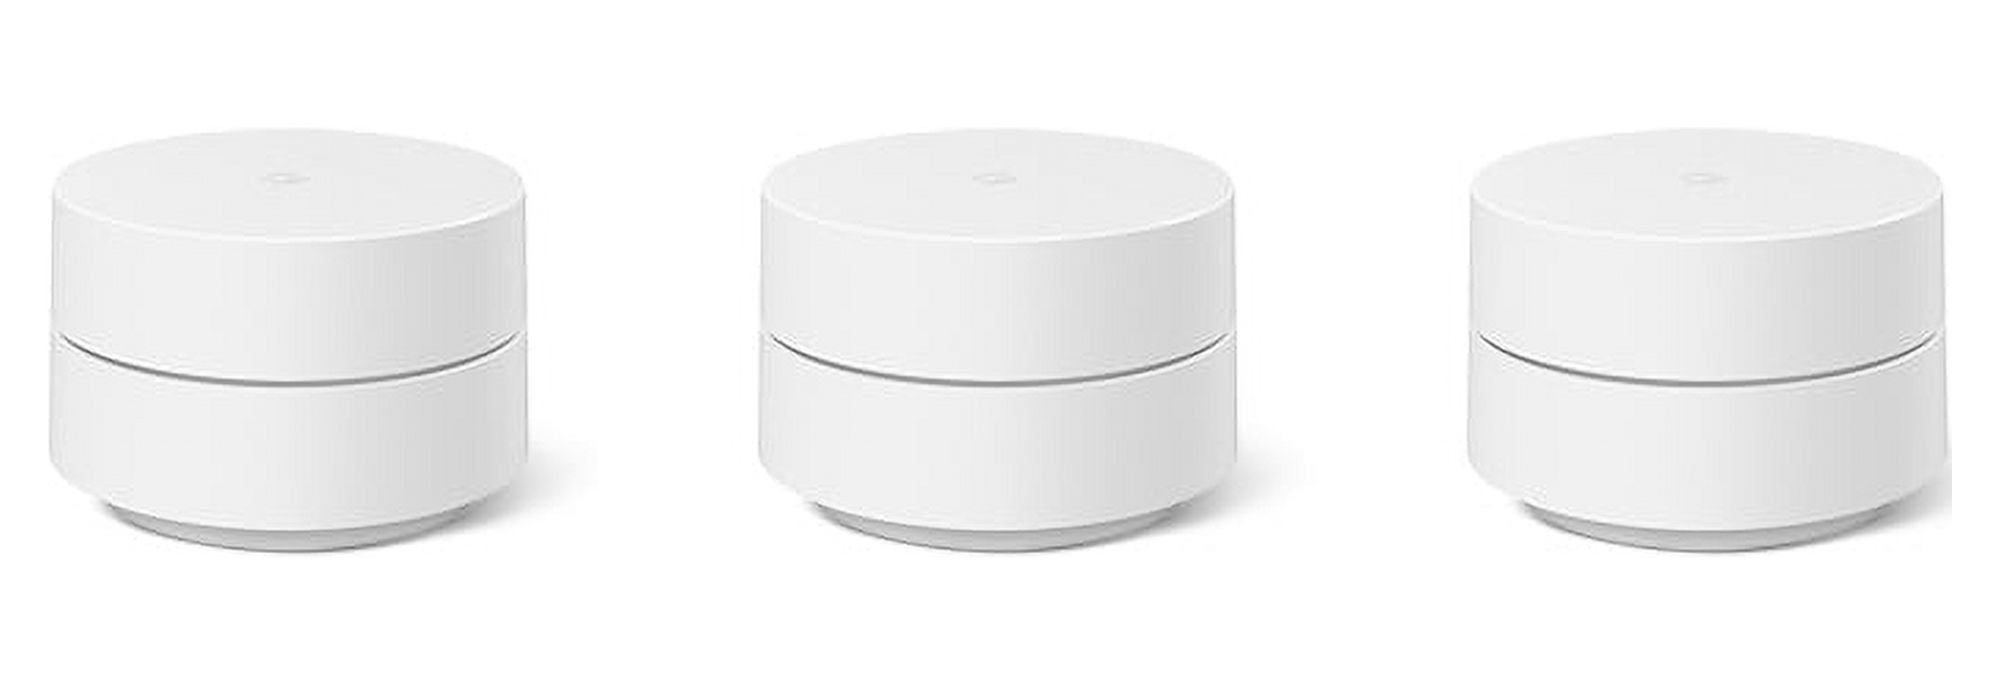 Google Wifi - Home Wi-Fi System - Mesh Wi-Fi - Whole Home Coverage